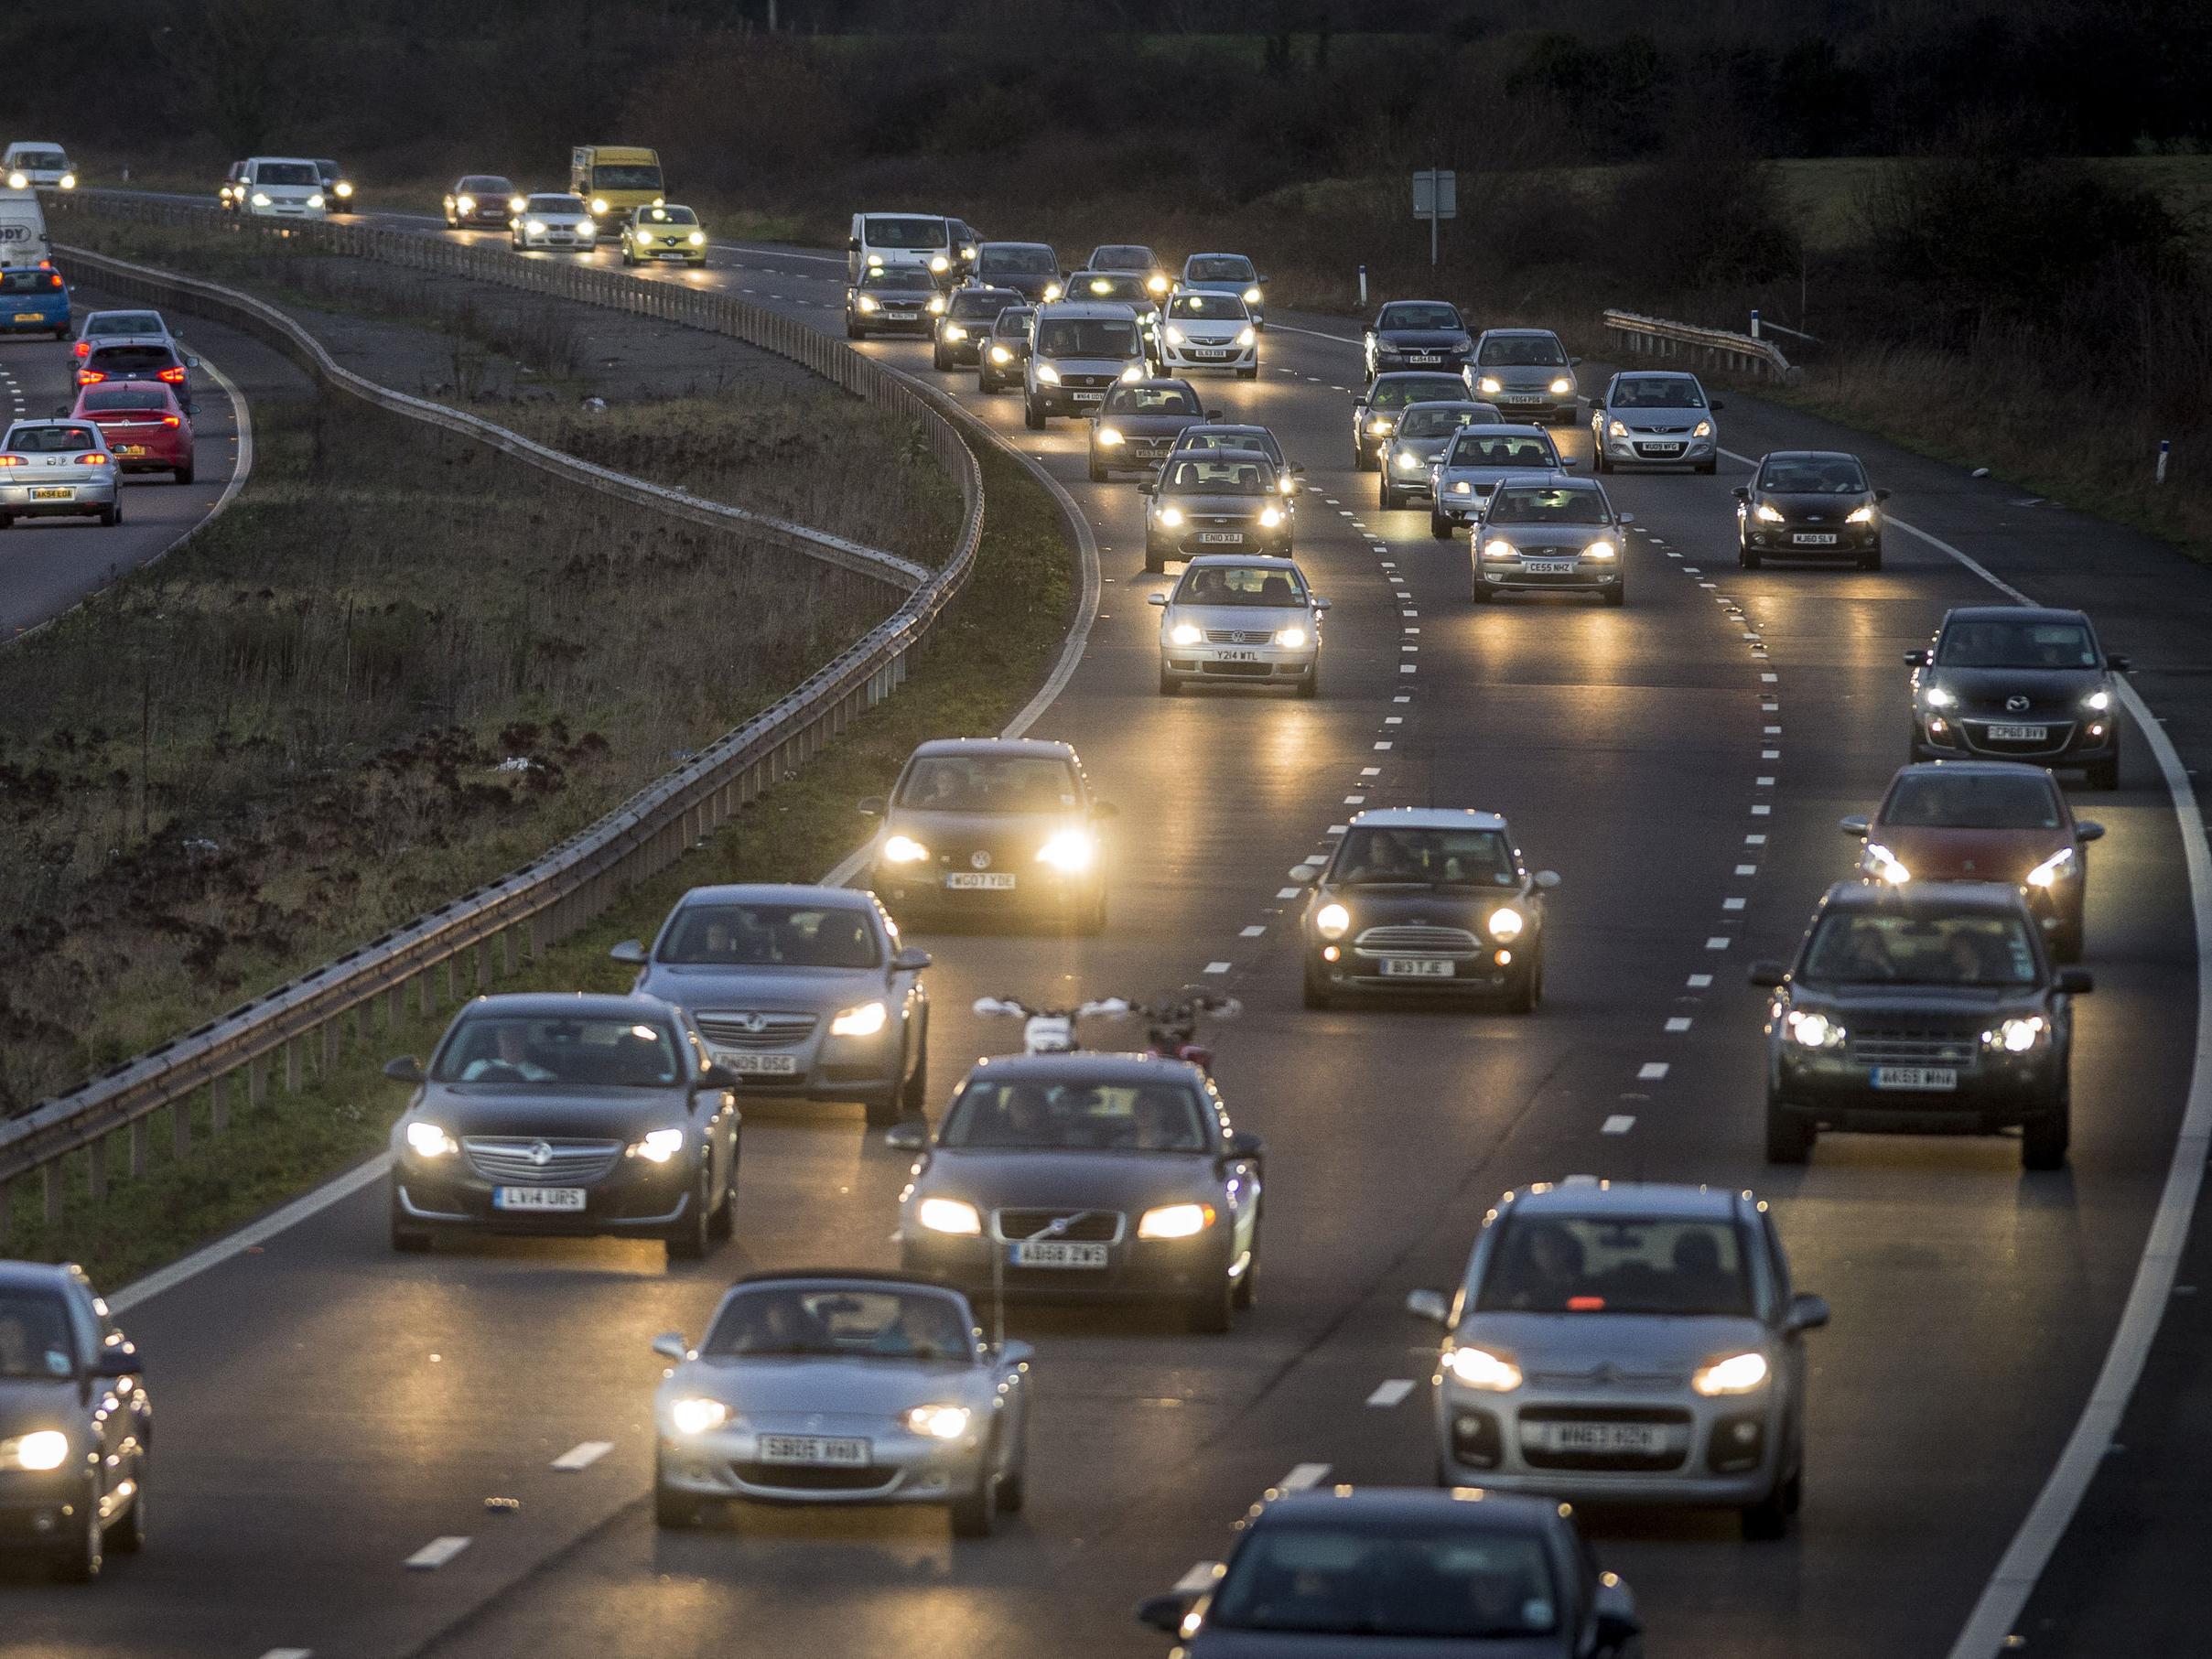 Traffic on the M5 motorway in Somerset